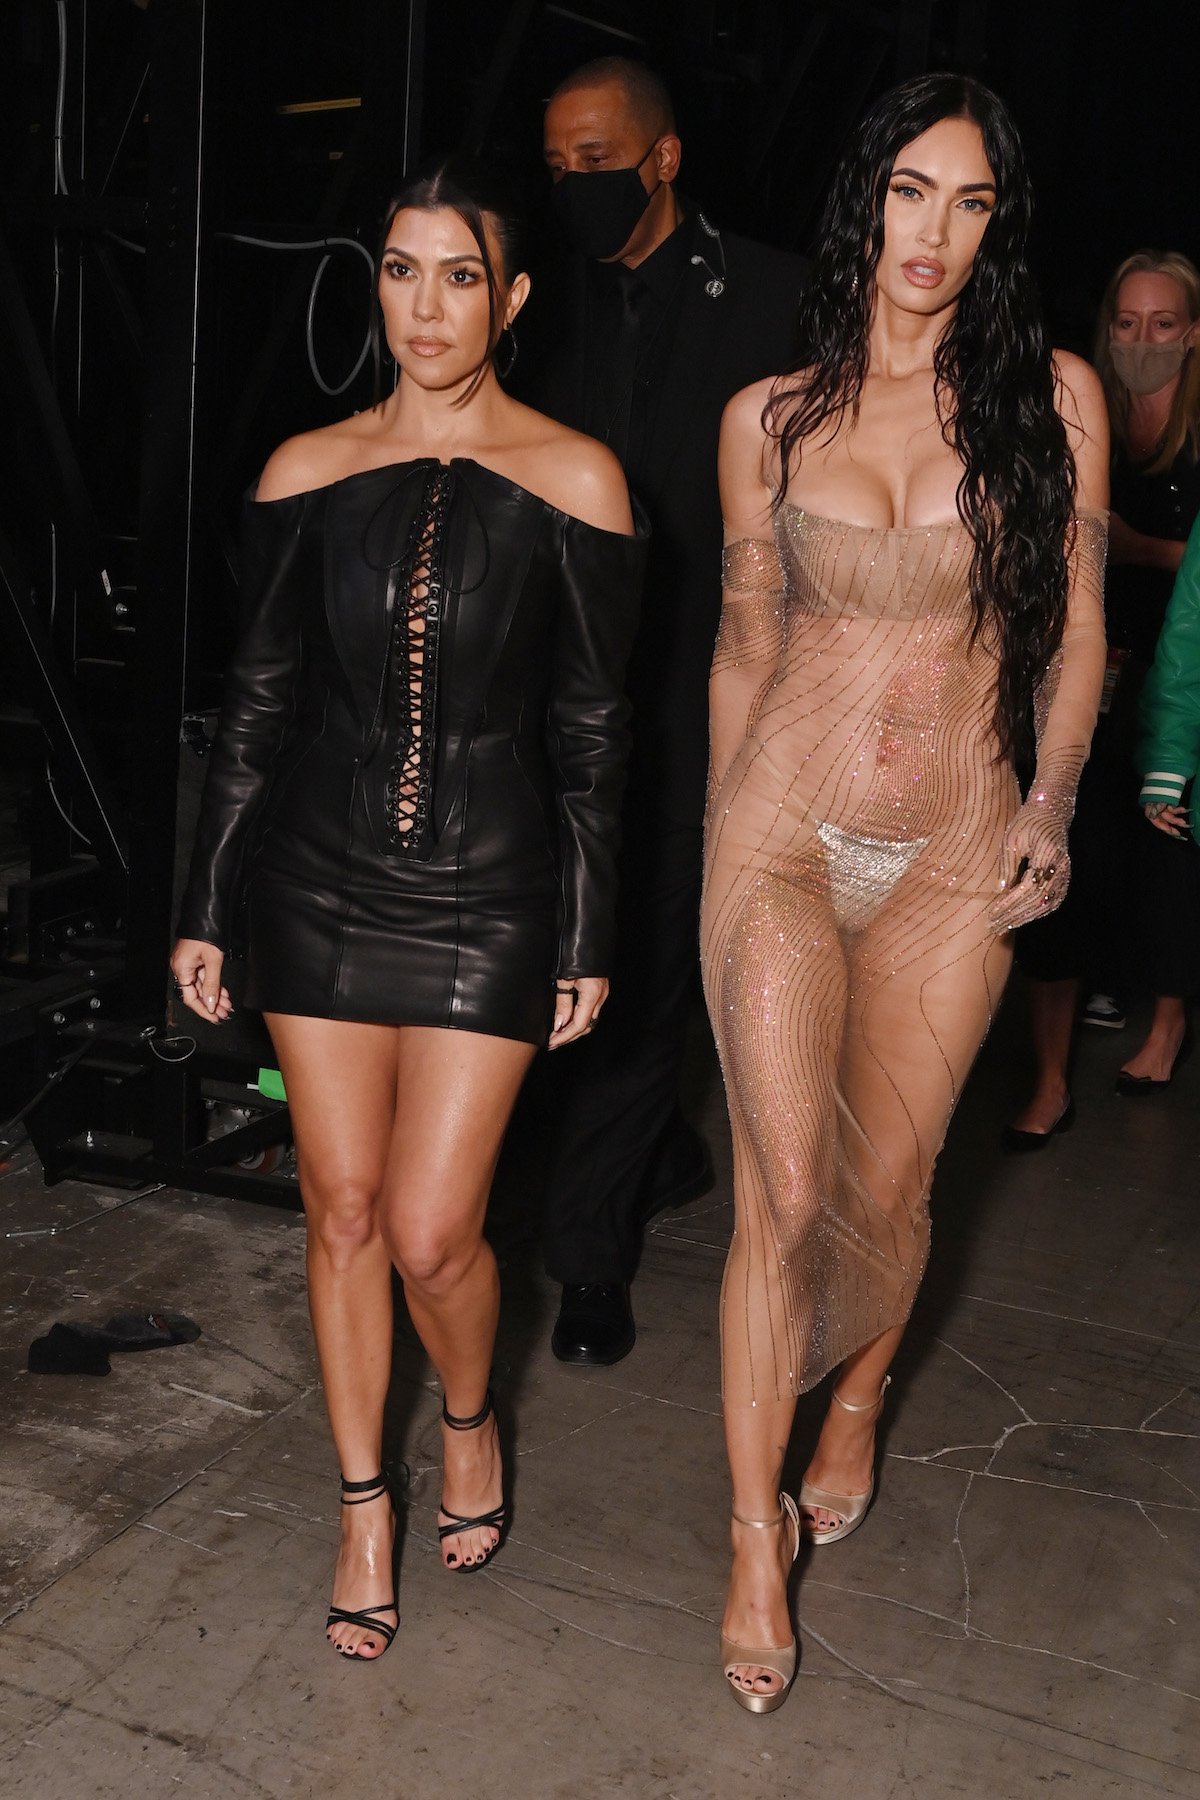 Kourtney Kardashian and Megan Fox walk together at the 2021 VMAs.